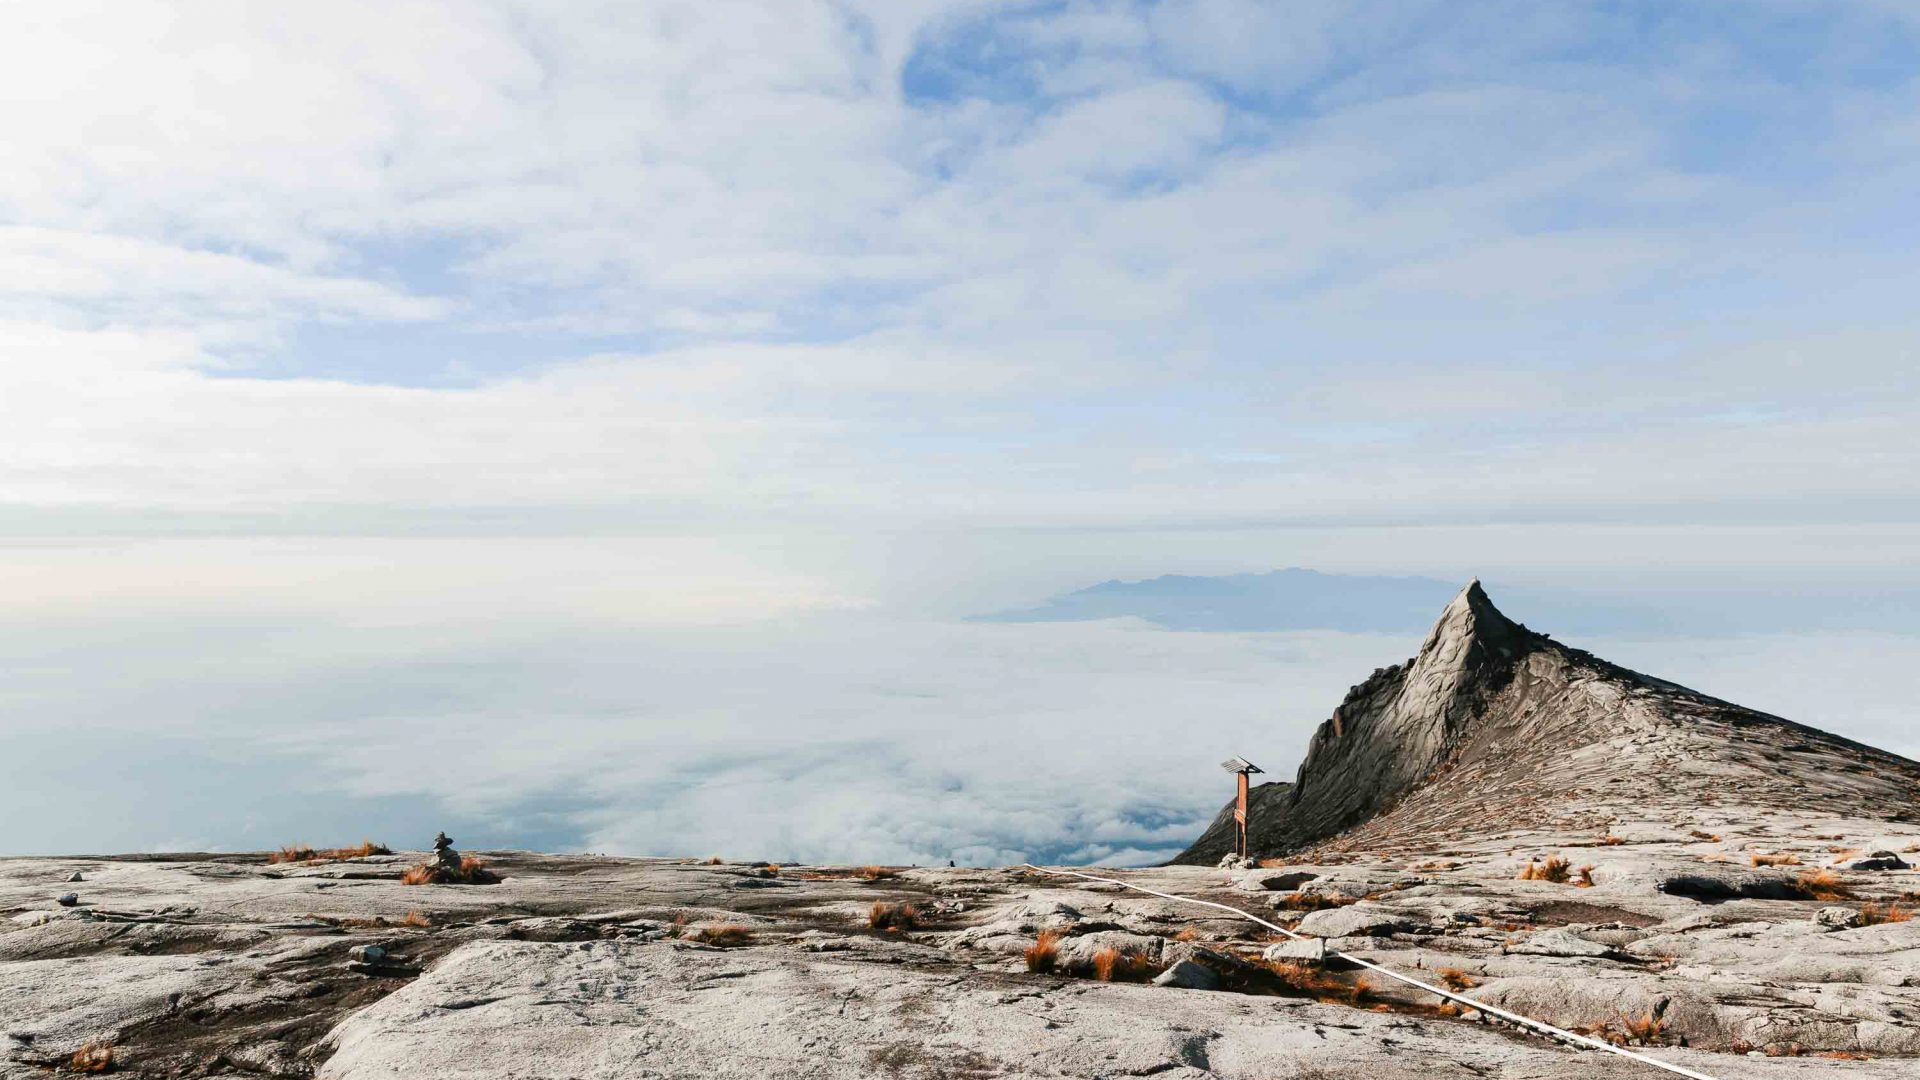 Mount Kinabalu summit approach in Borneo.